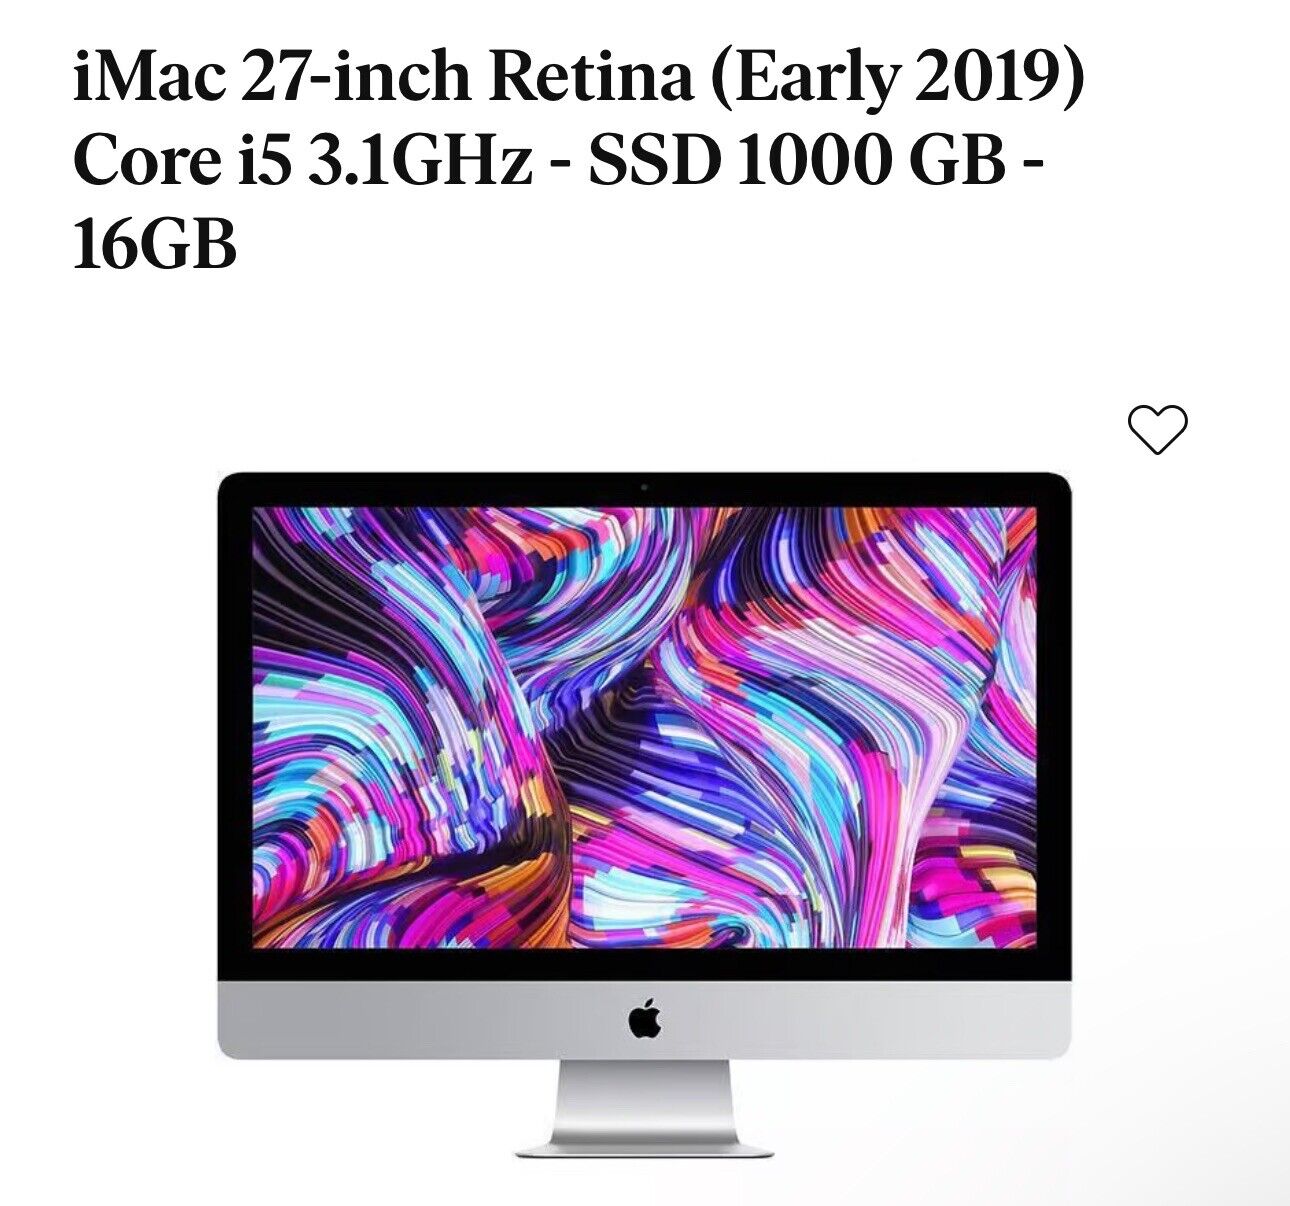 iMac 27-inch Retina (Early2019) Core i5 3.1GHz -SSD 1000 GB - 16GB